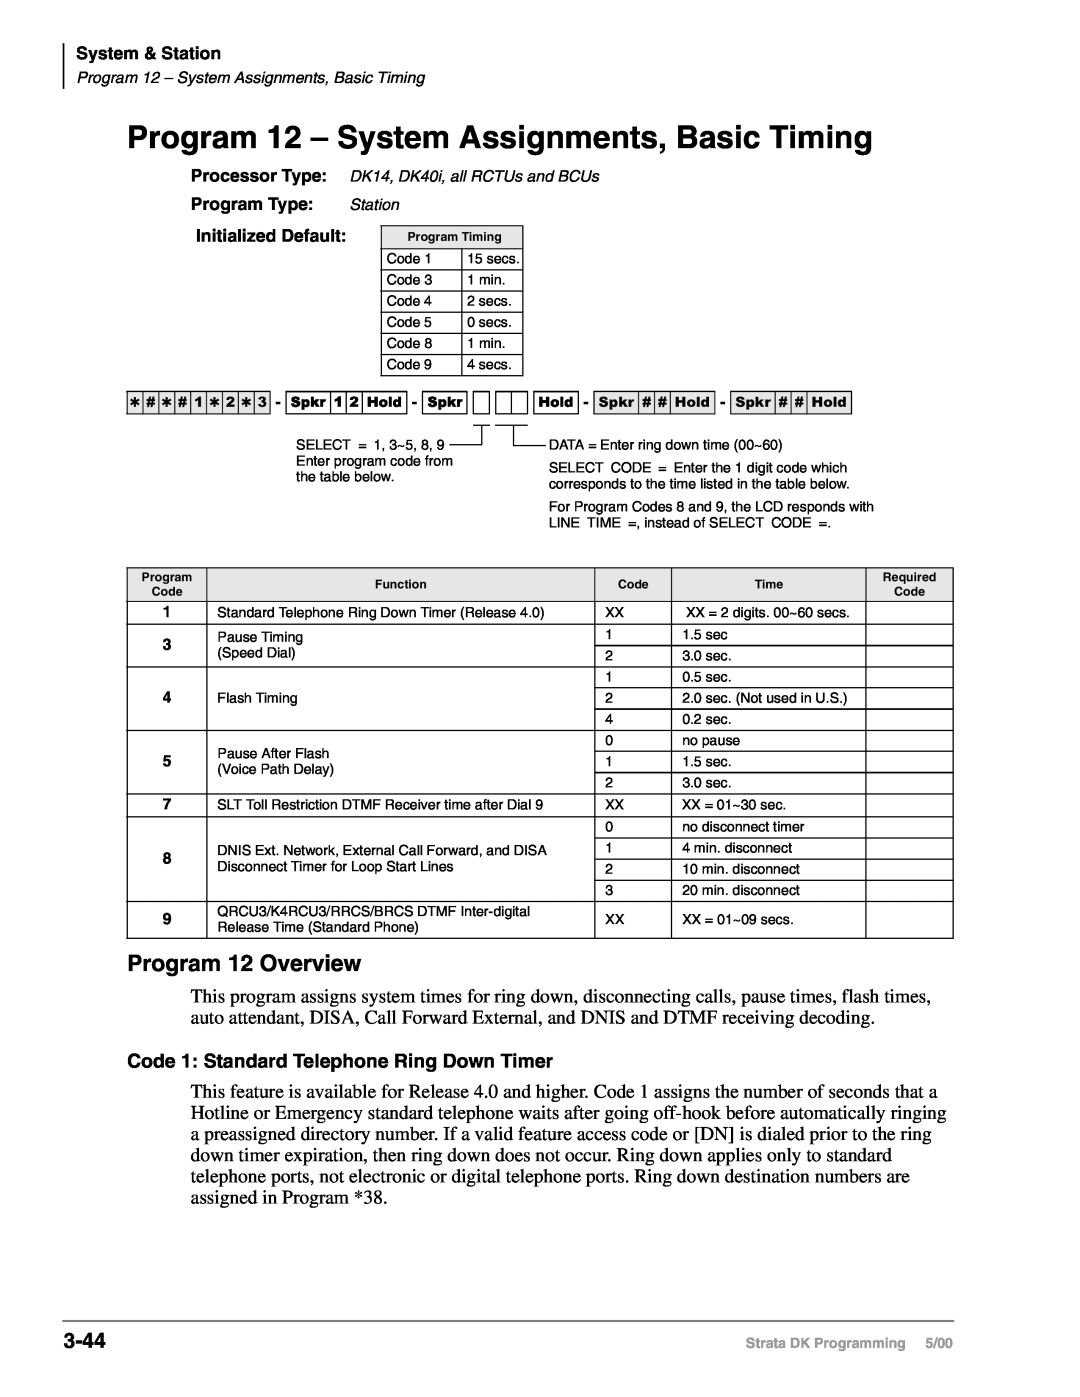 Toshiba dk14, DK40I, DK424I manual Program 12 – System Assignments, Basic Timing, Program 12 Overview, 3-44 